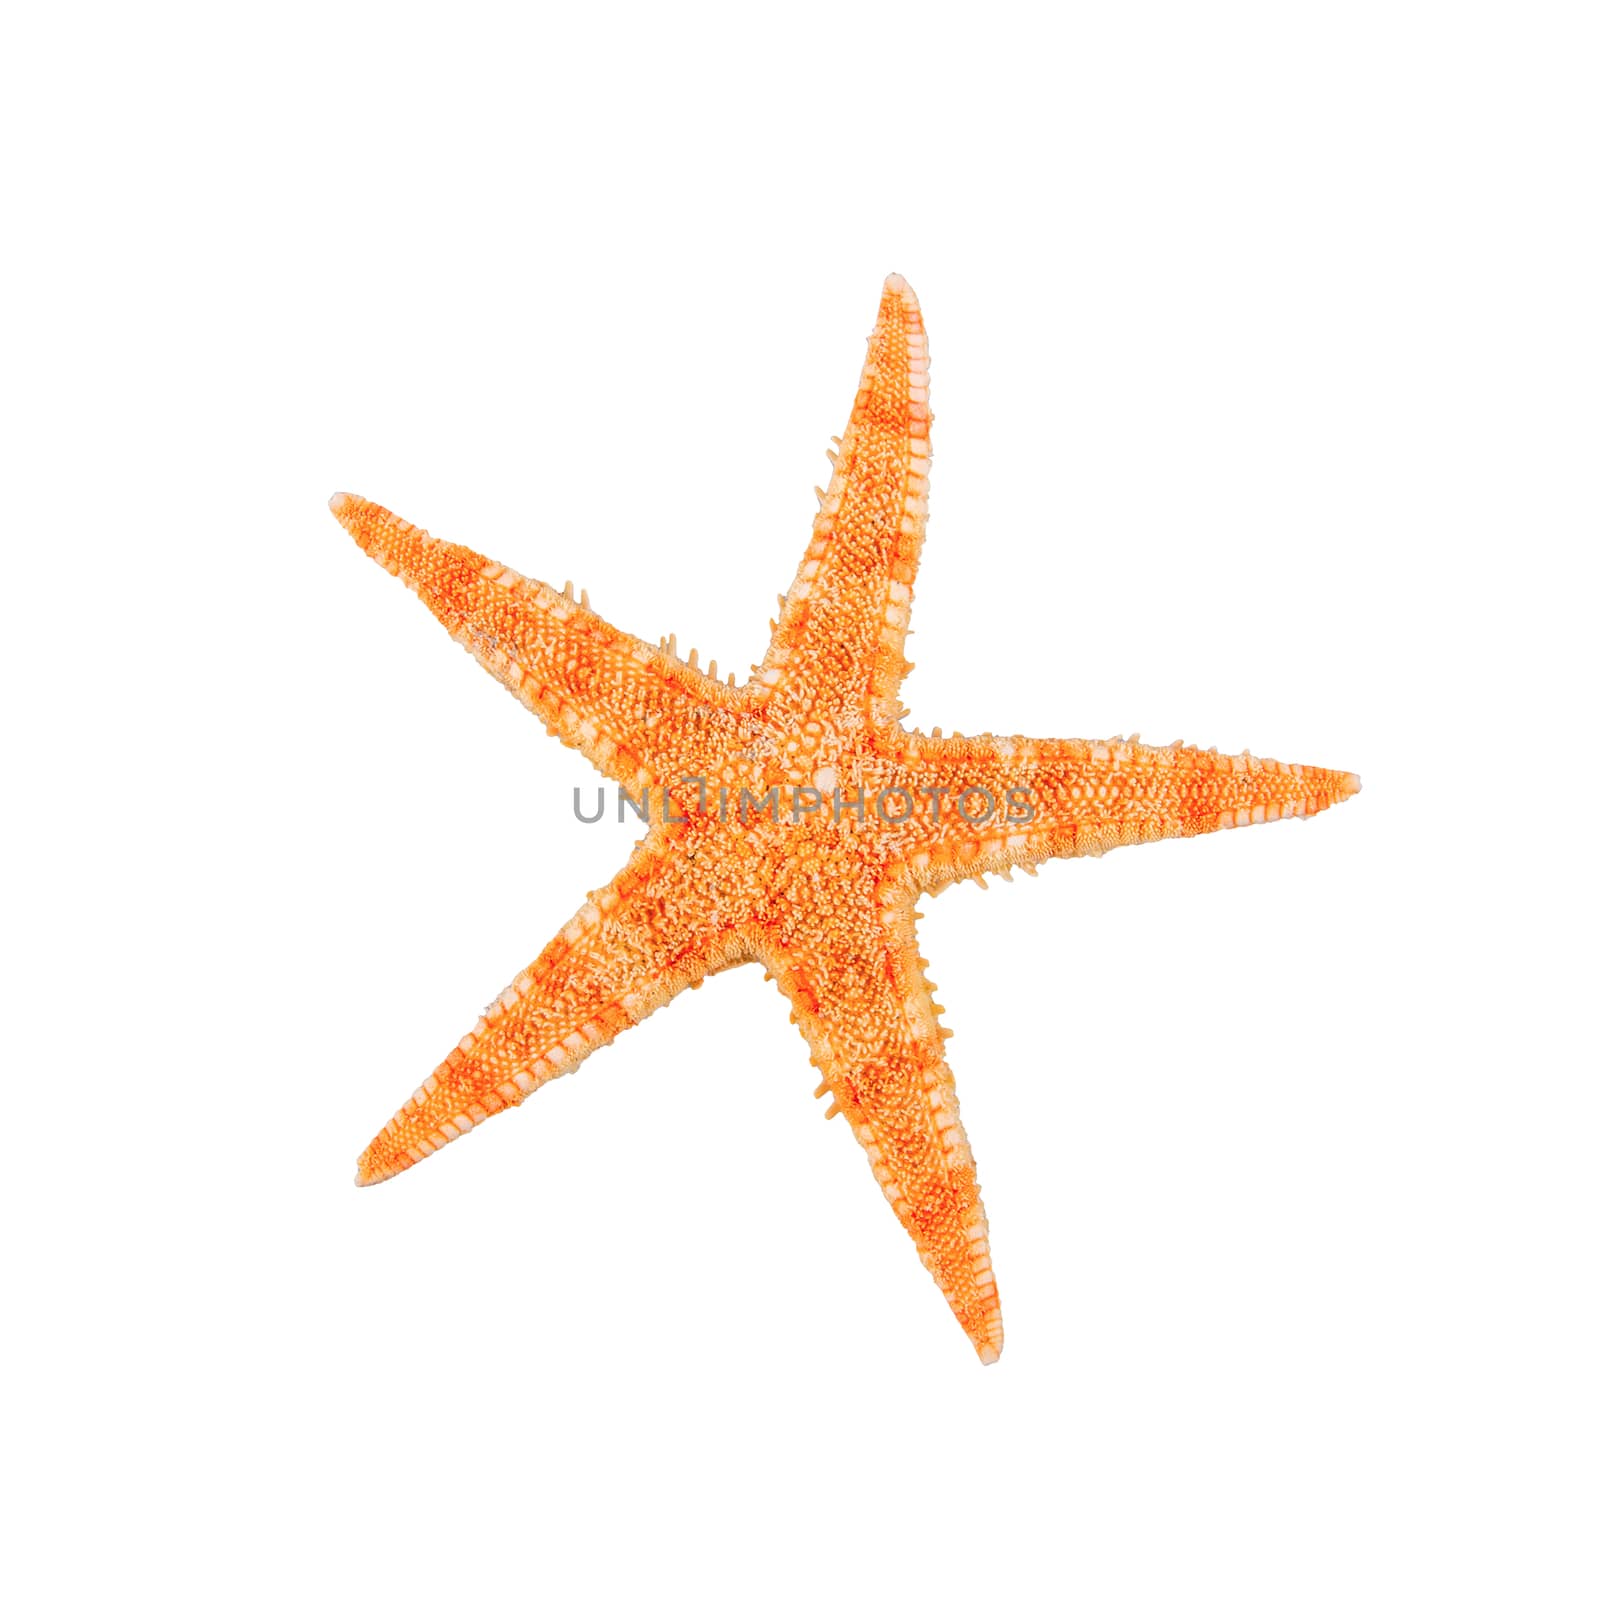 Sea starfish on a white background by neryx